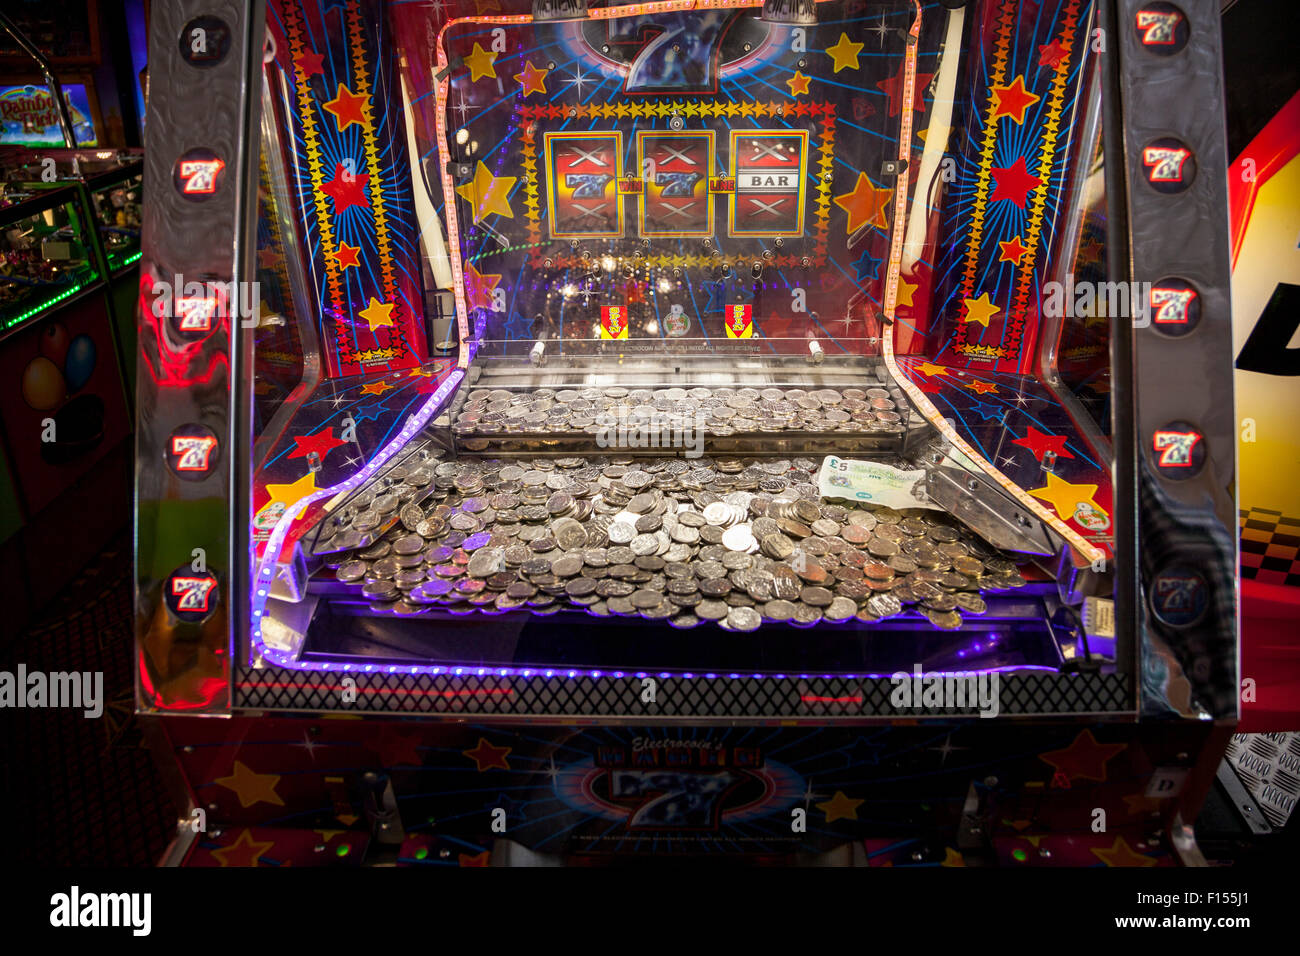 Coin pusher gambling machine Stock Photo